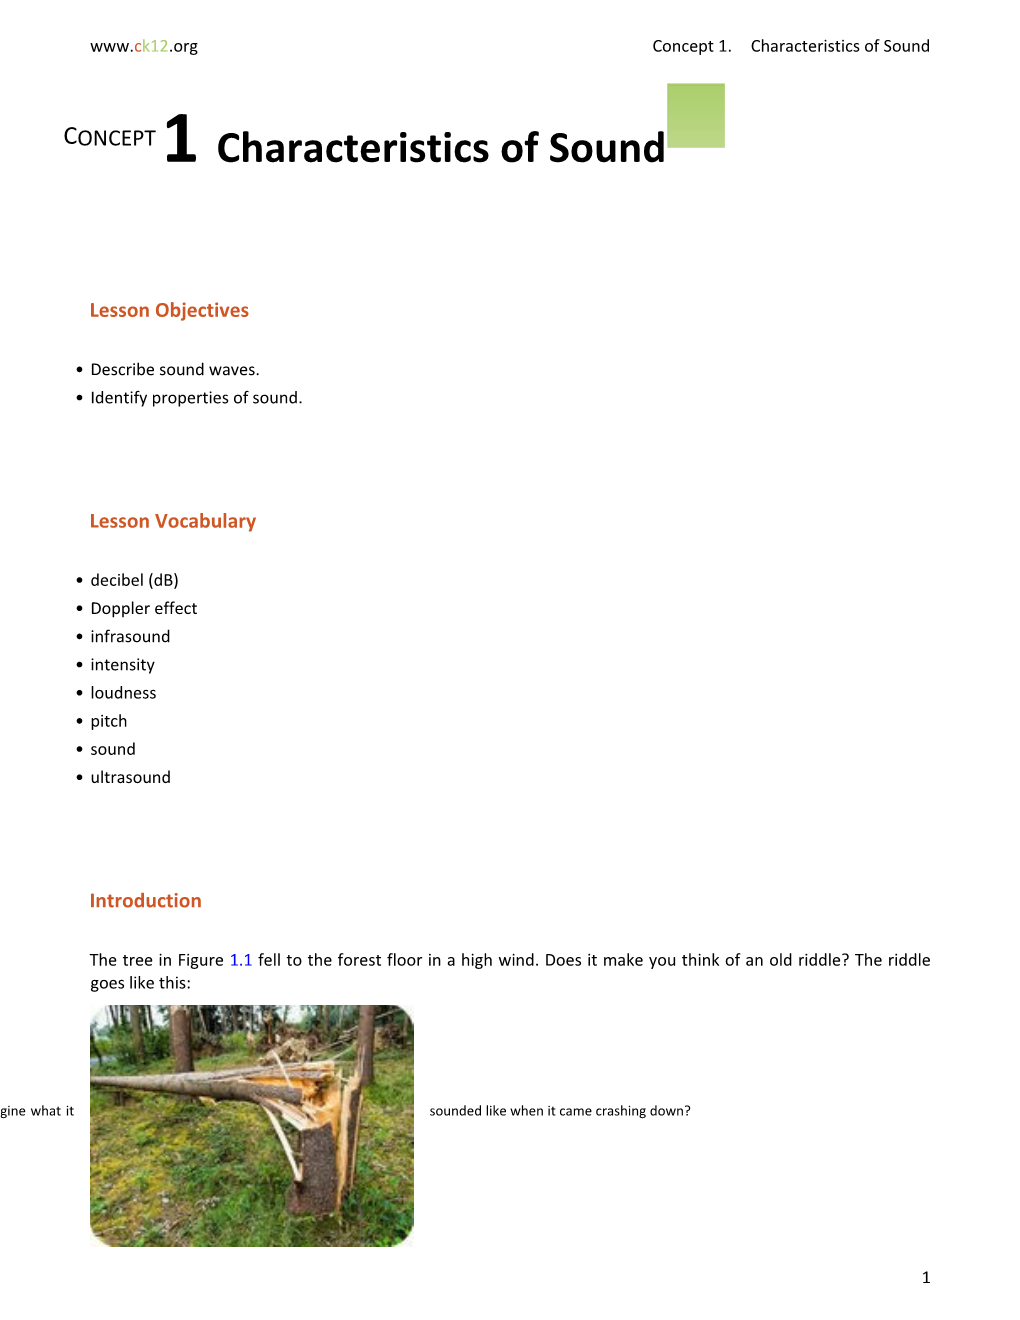 1.Characteristics of Sound